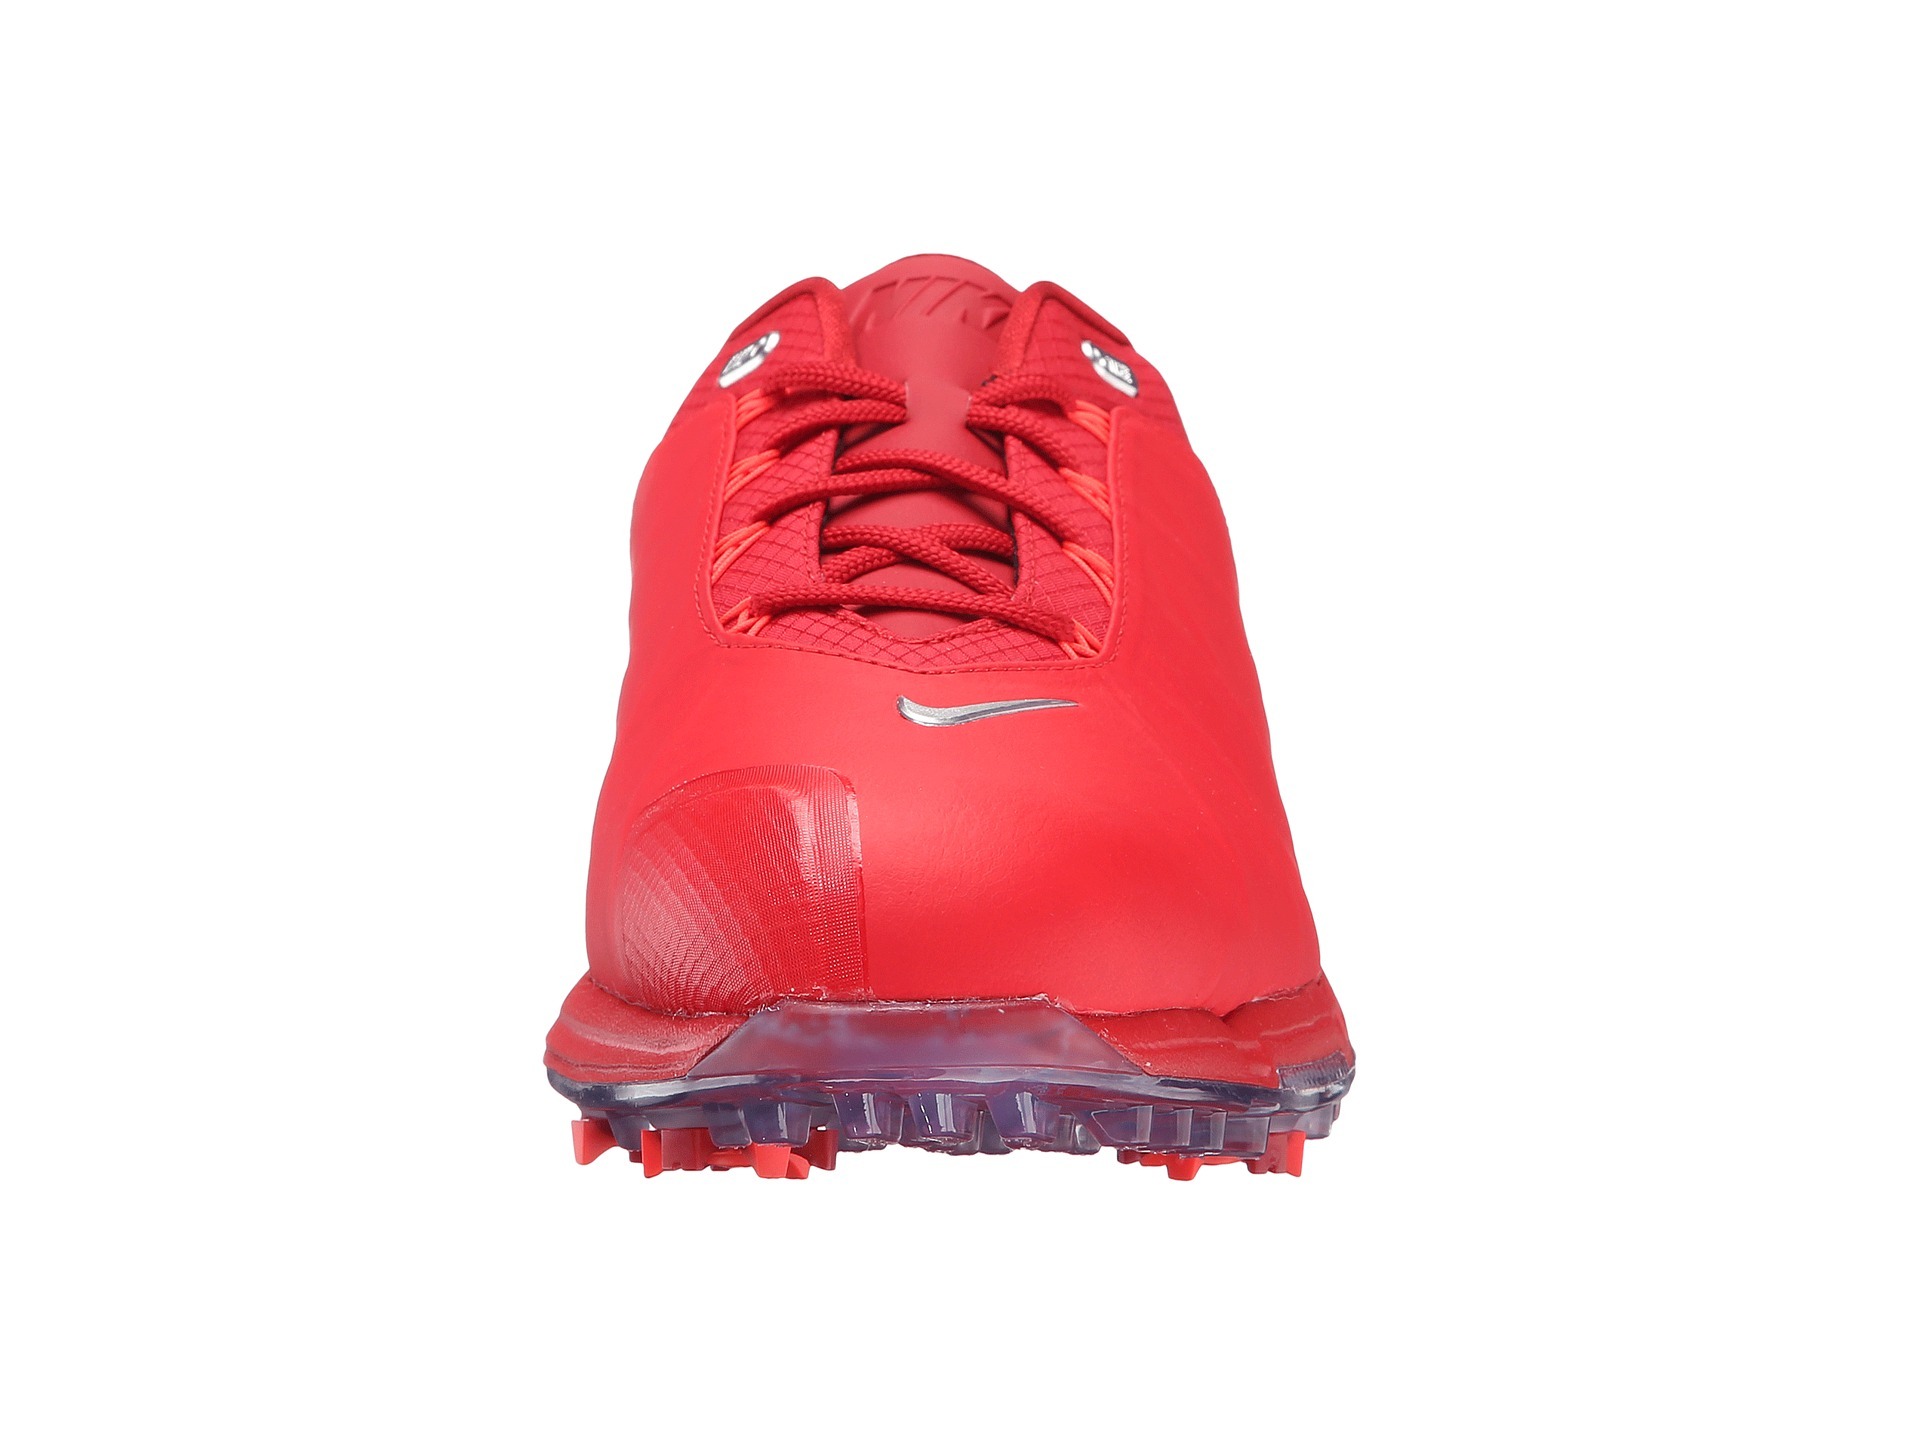 nike lunar fire golf shoes red cheap online